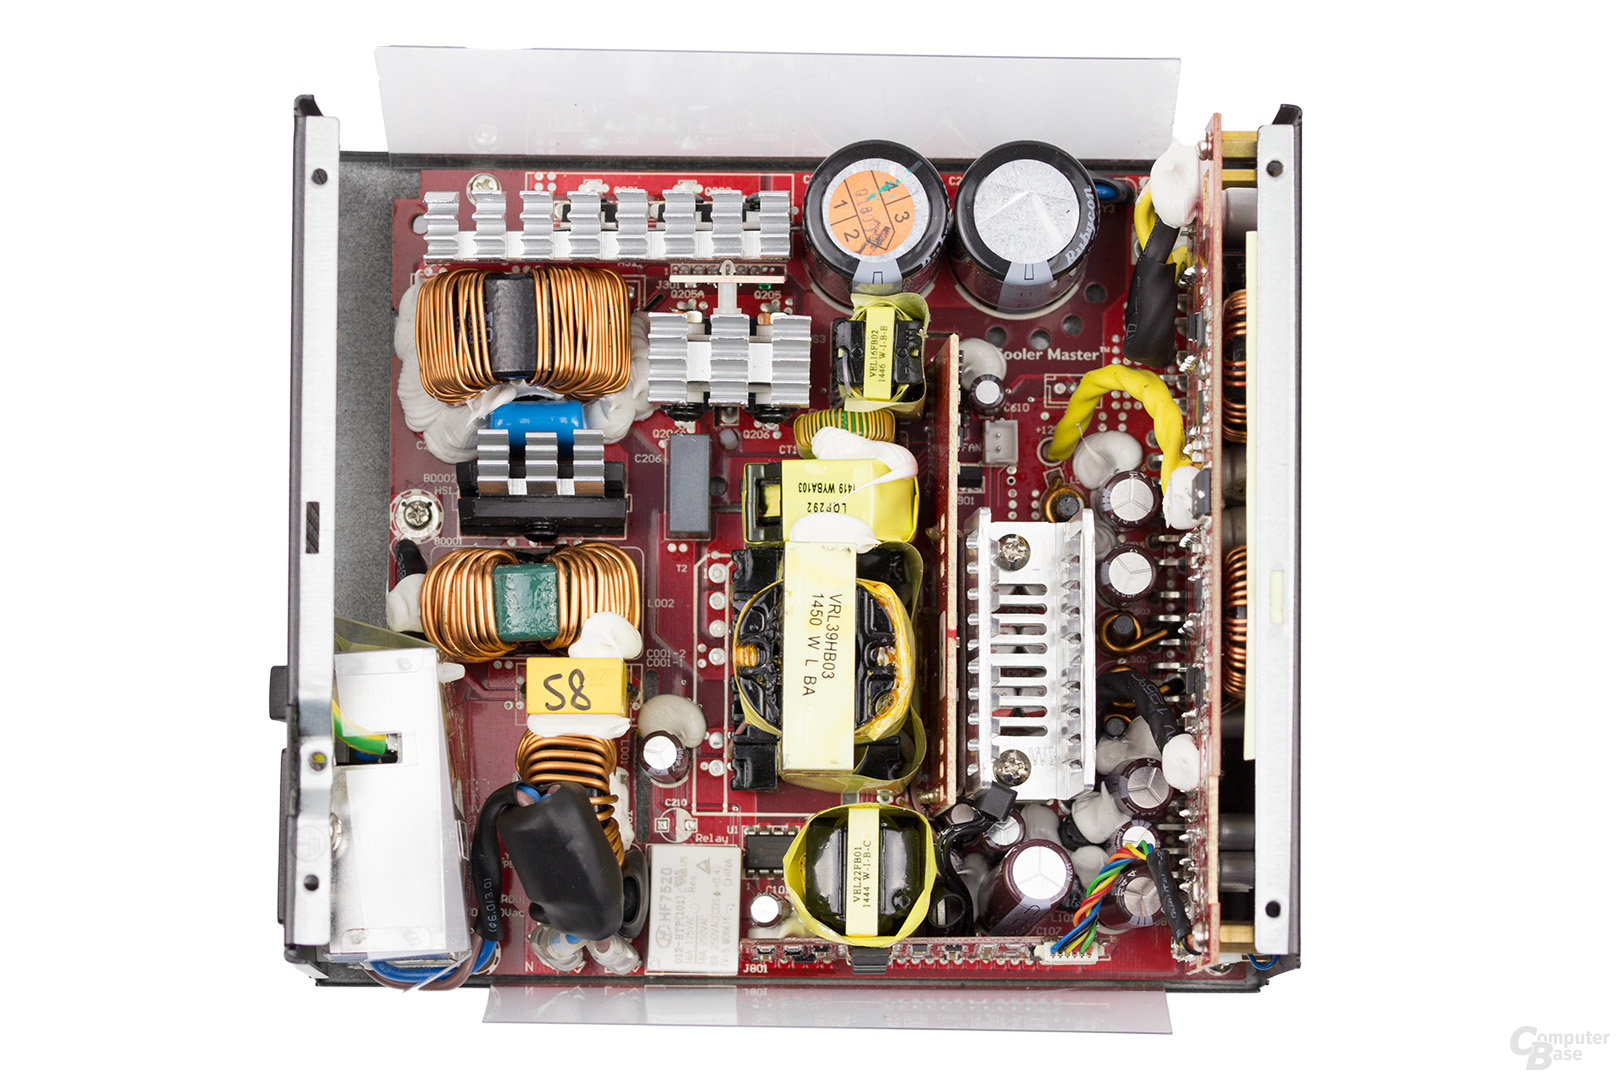 Cooler Master V850 – Überblick Elektronik